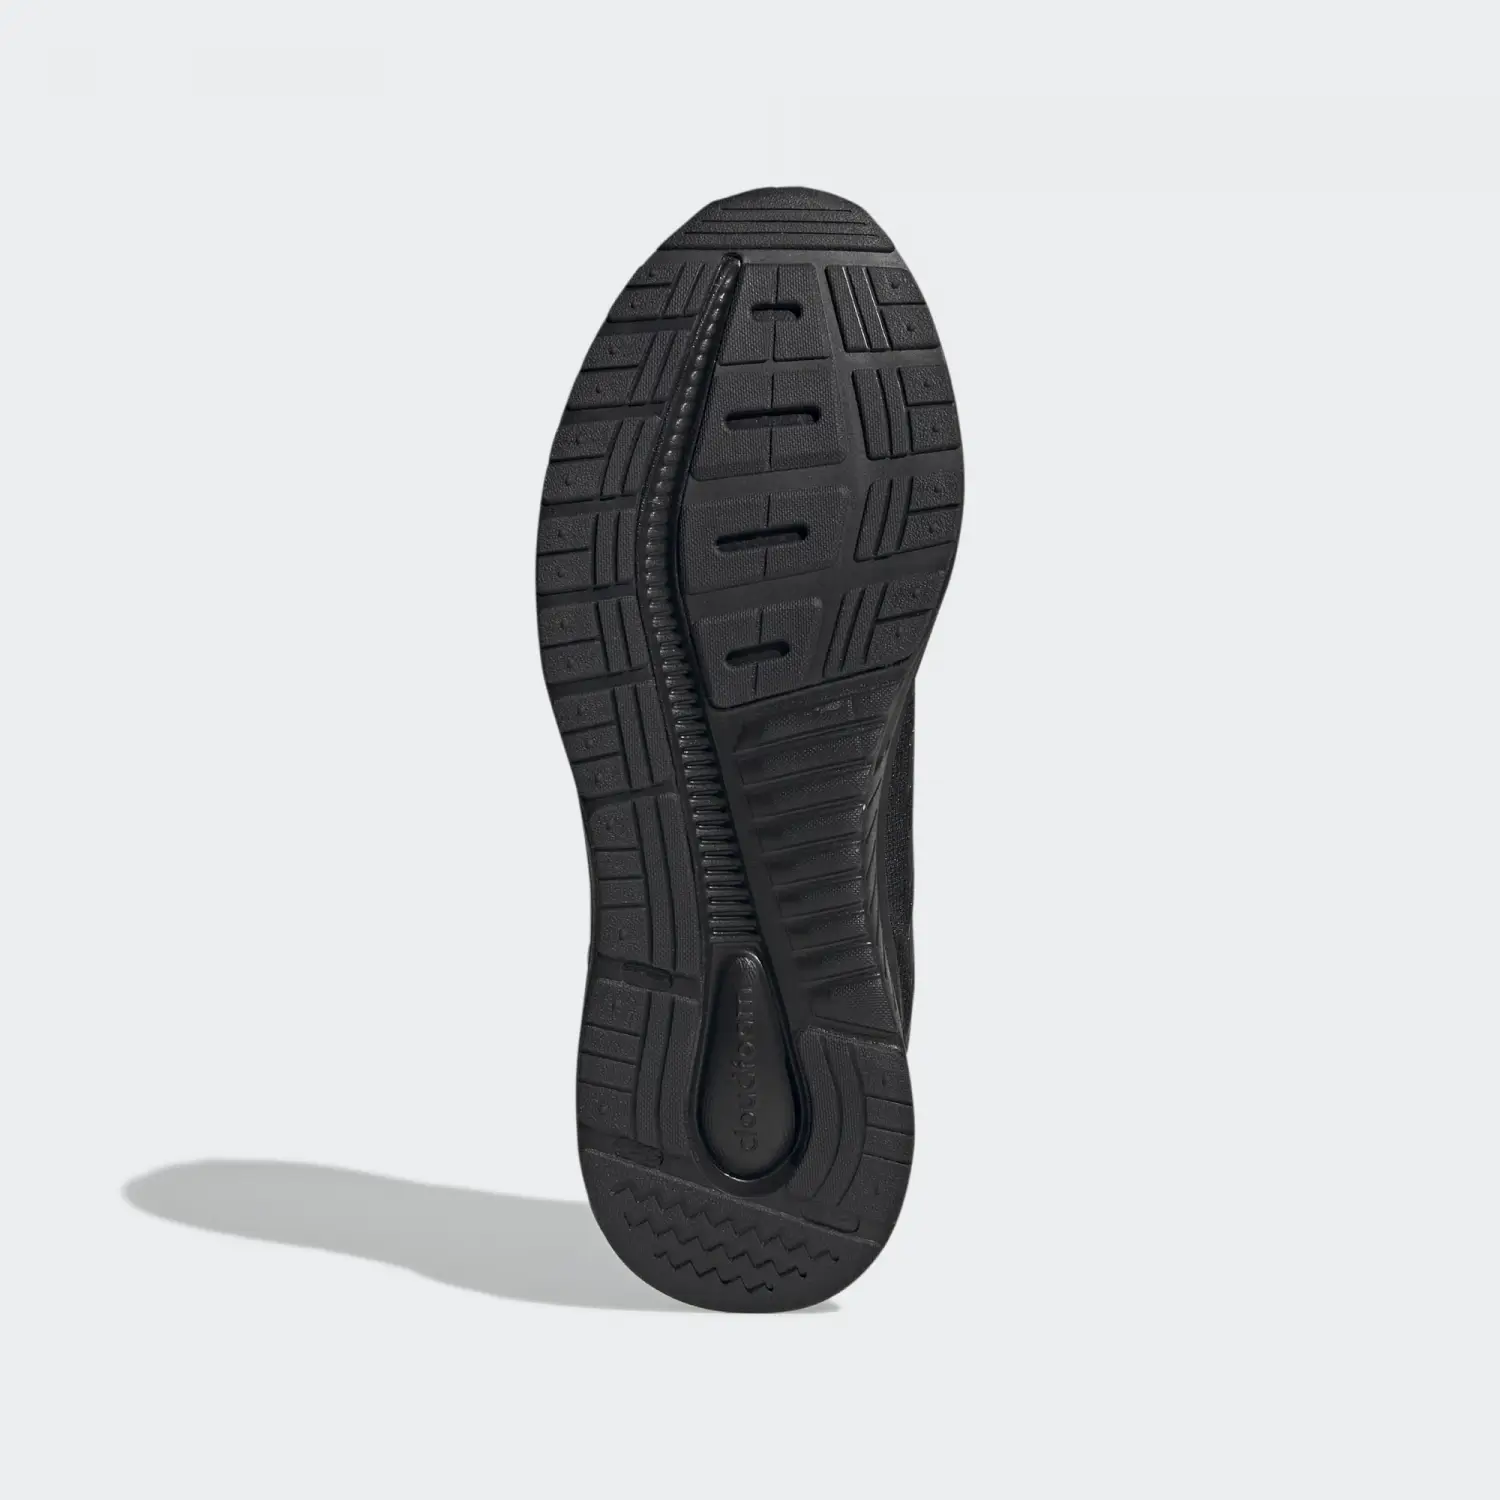 adidas Erkek Galaxy 5 Siyah Koşu Ayakkabı    -FY6718